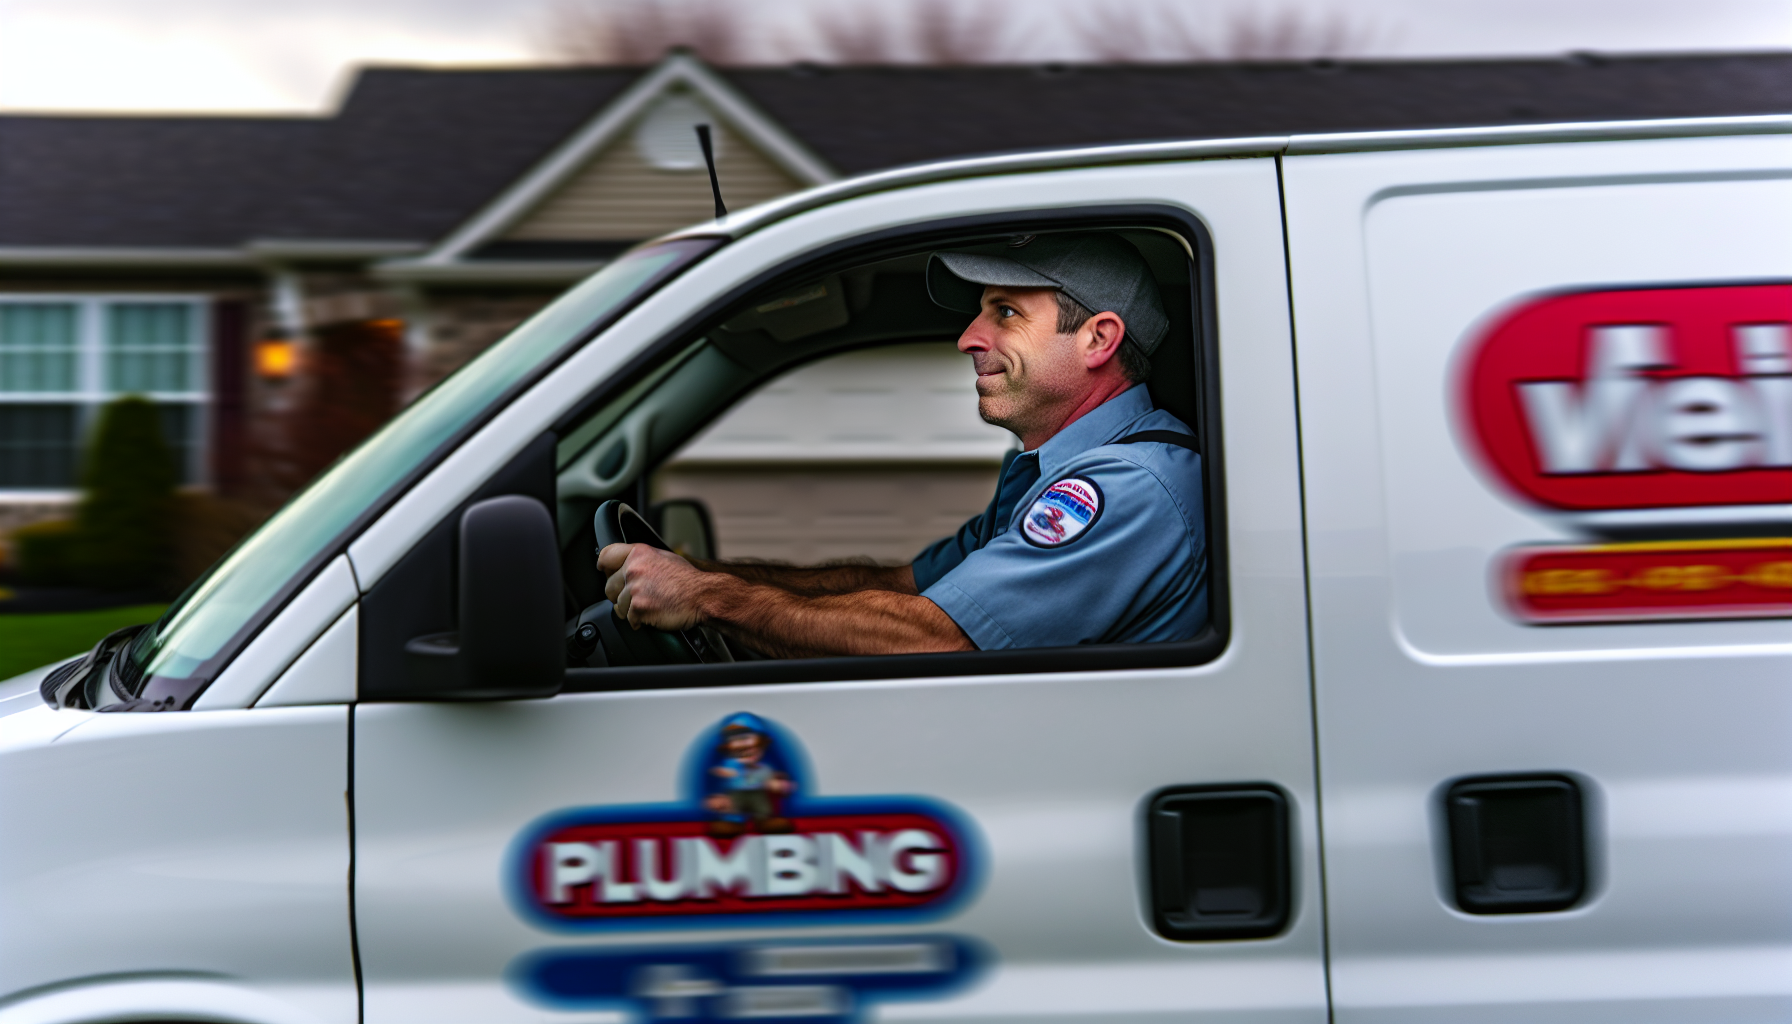 Plumber responding to an emergency call